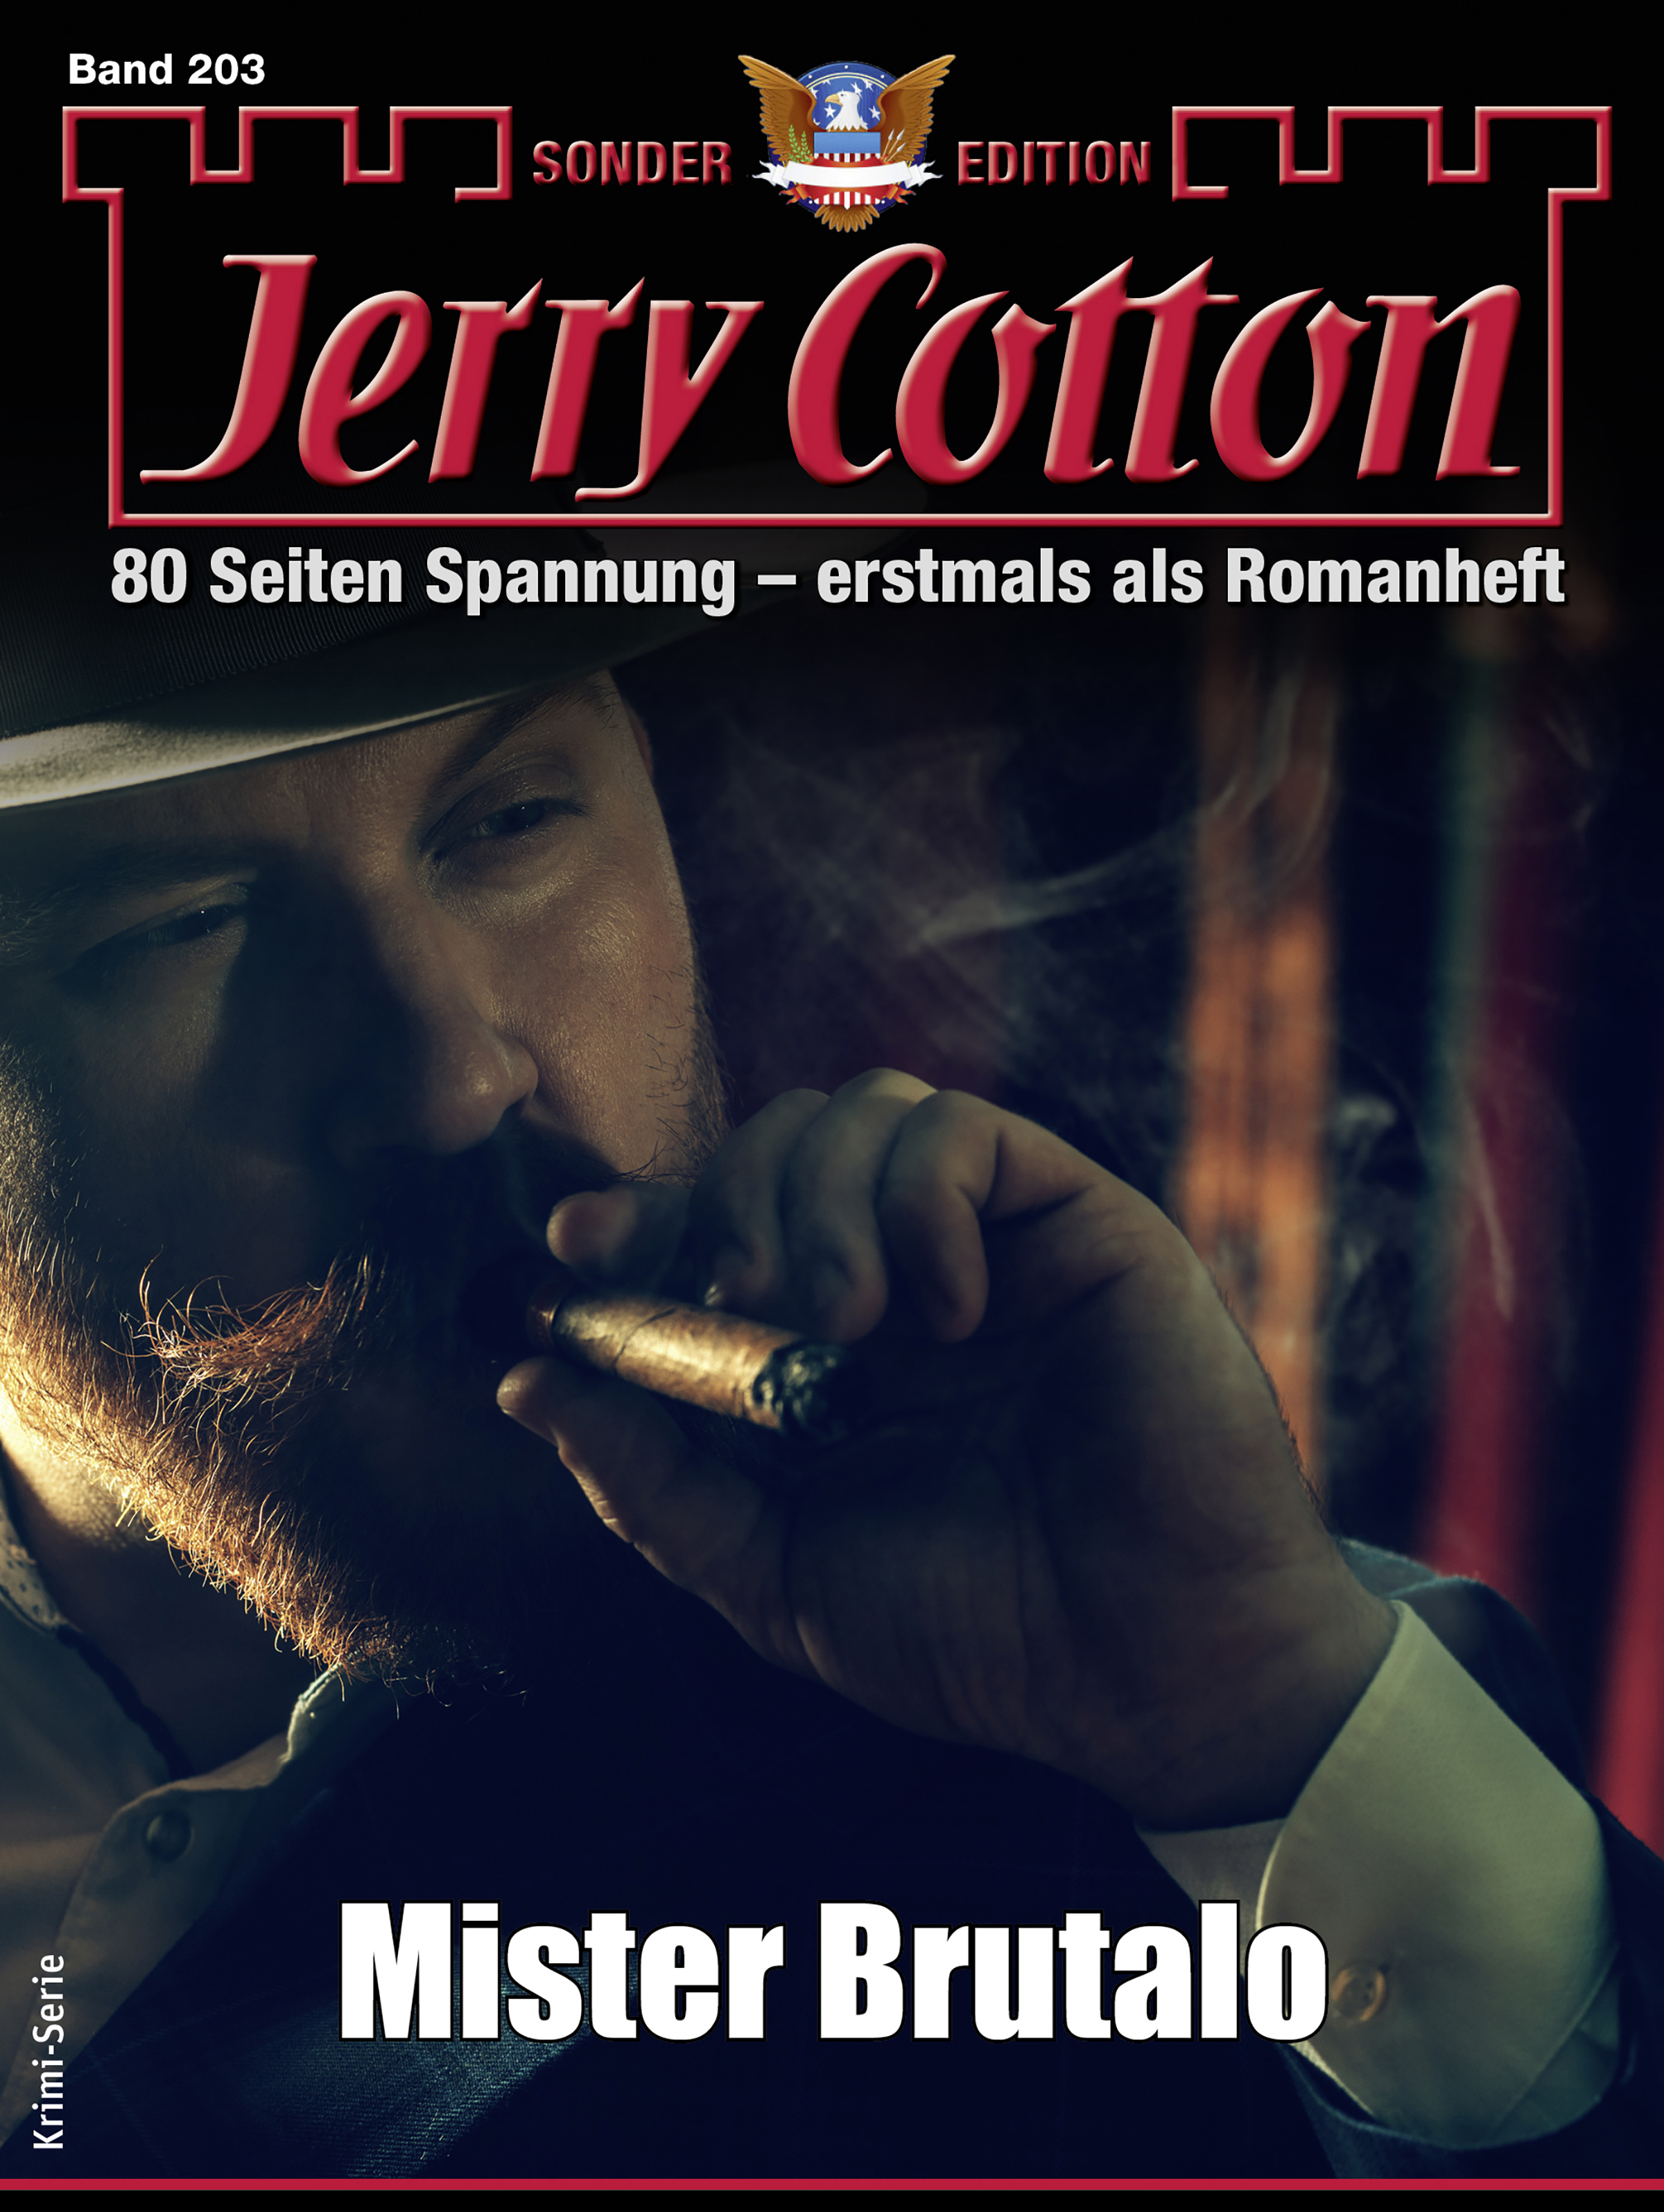 Jerry Cotton Sonder-Edition 203